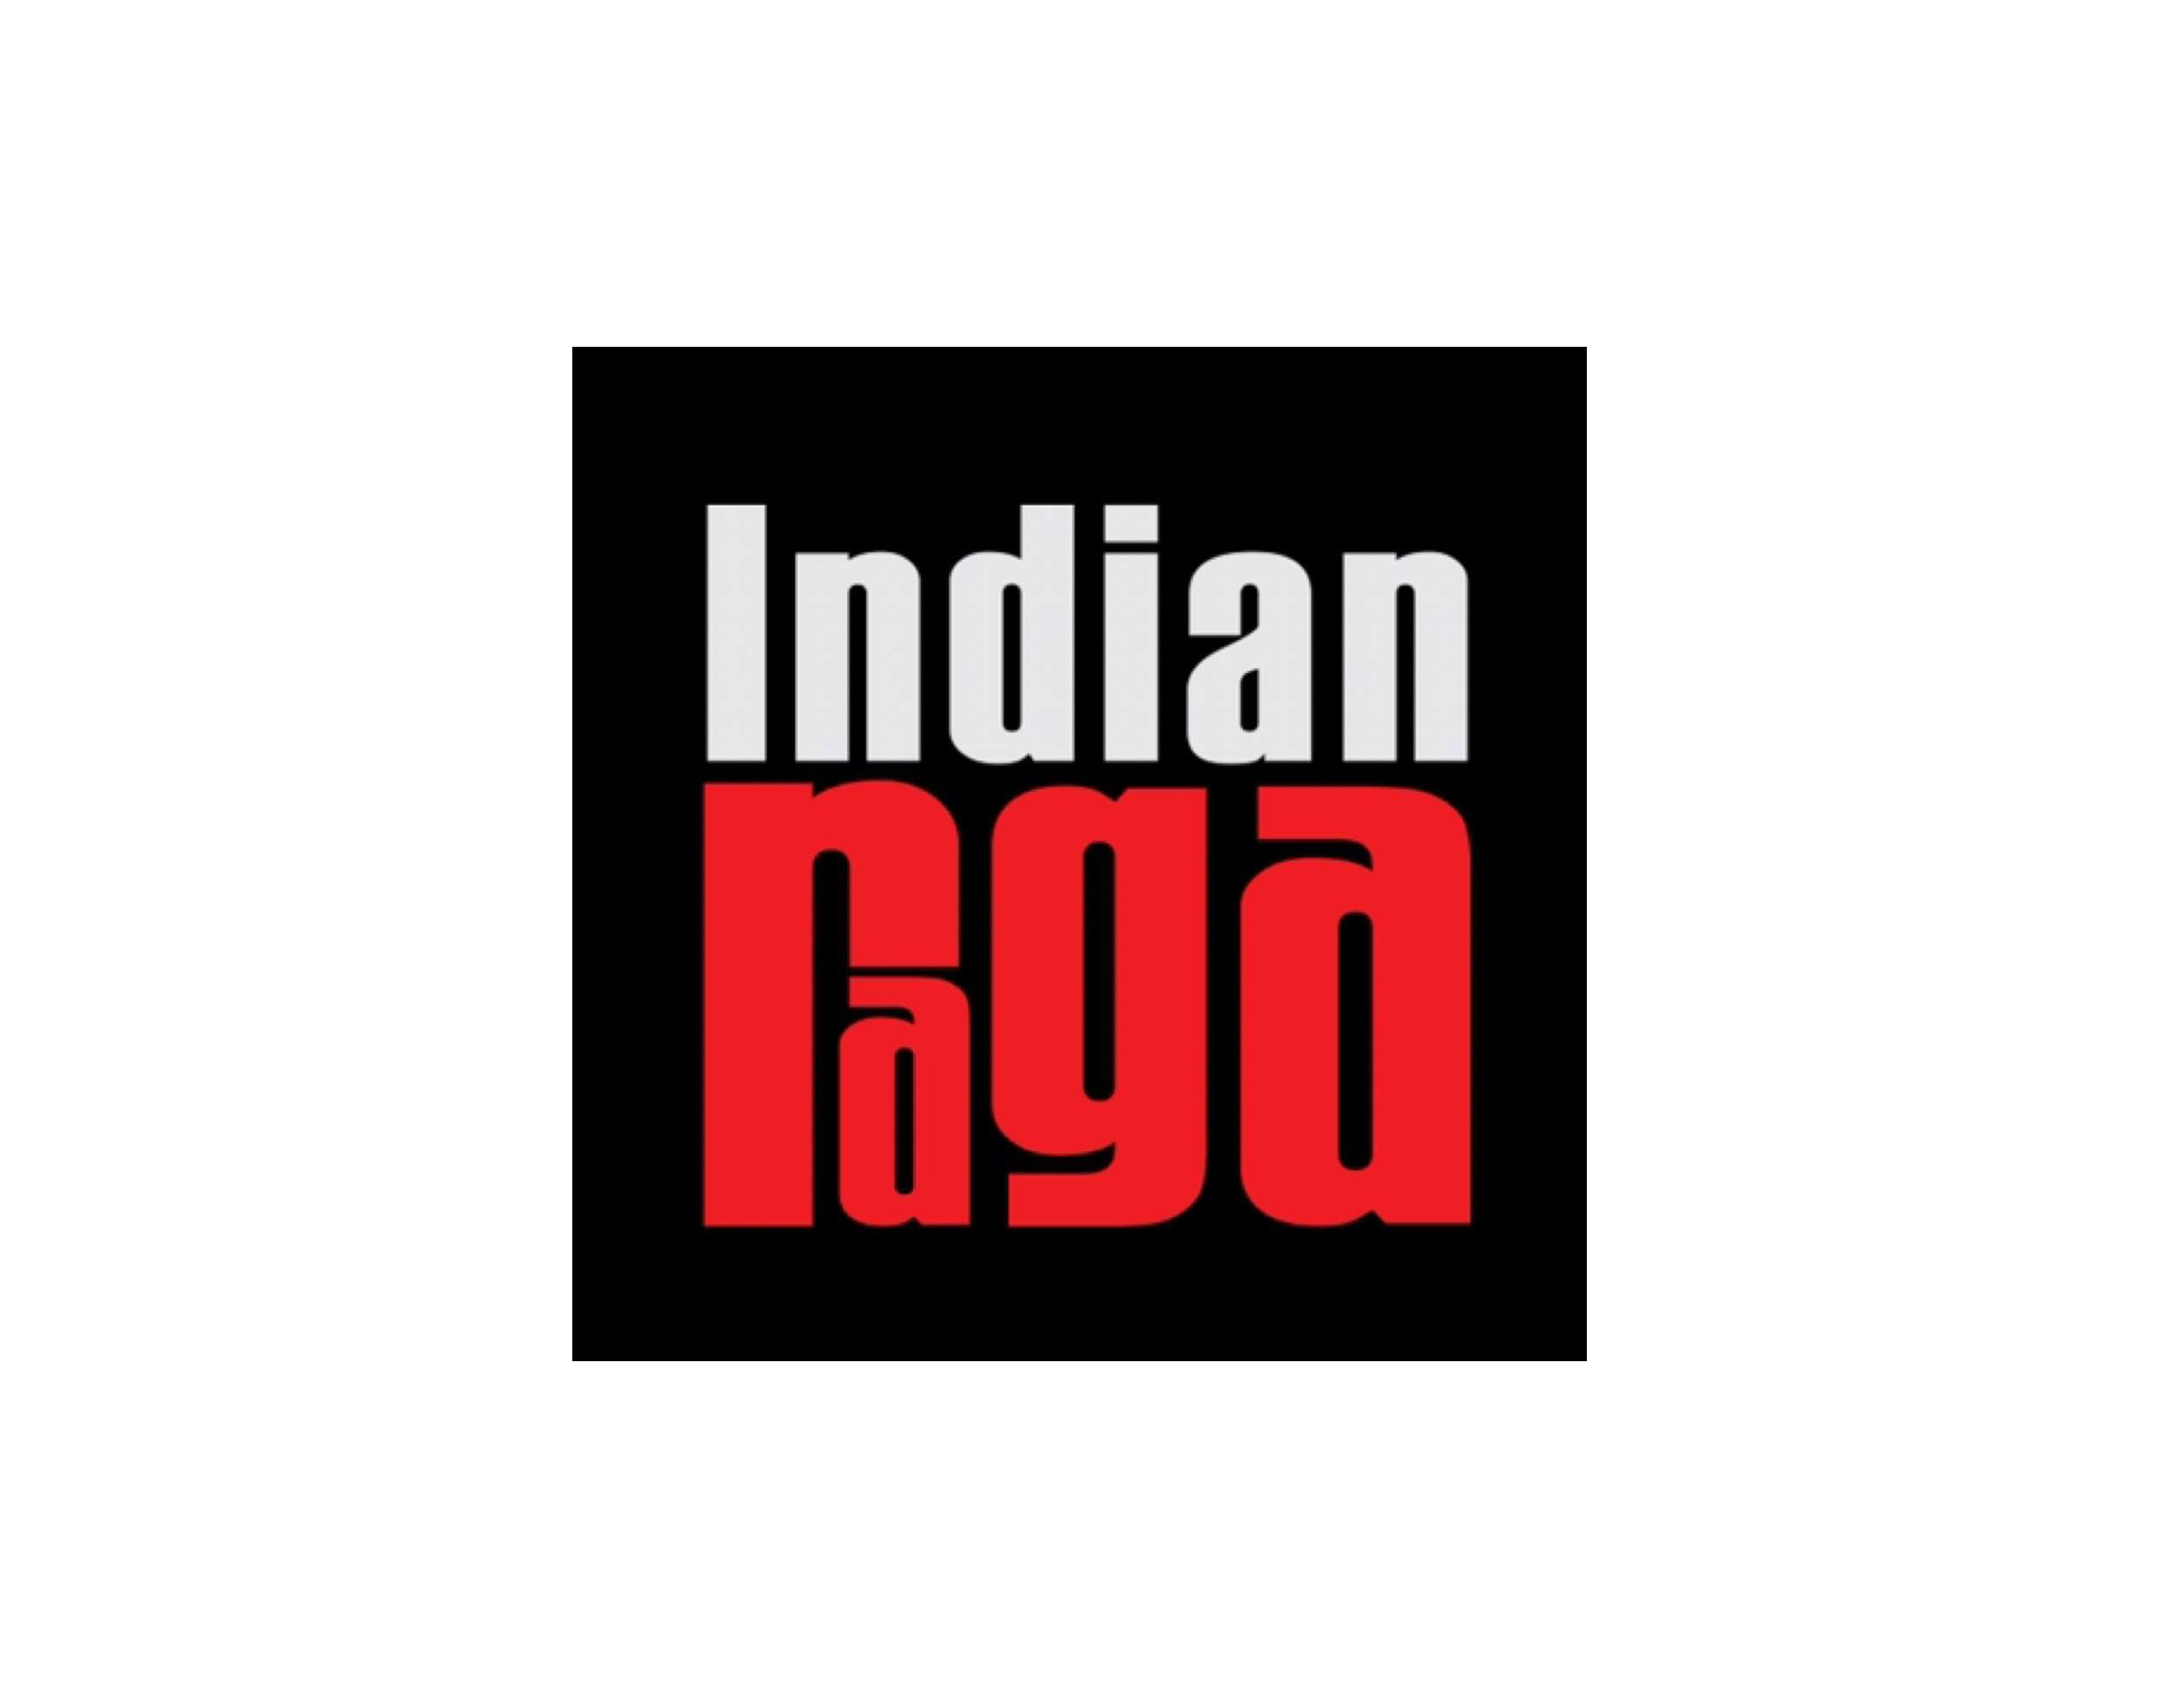 Making Classical Cool - IndianRaga